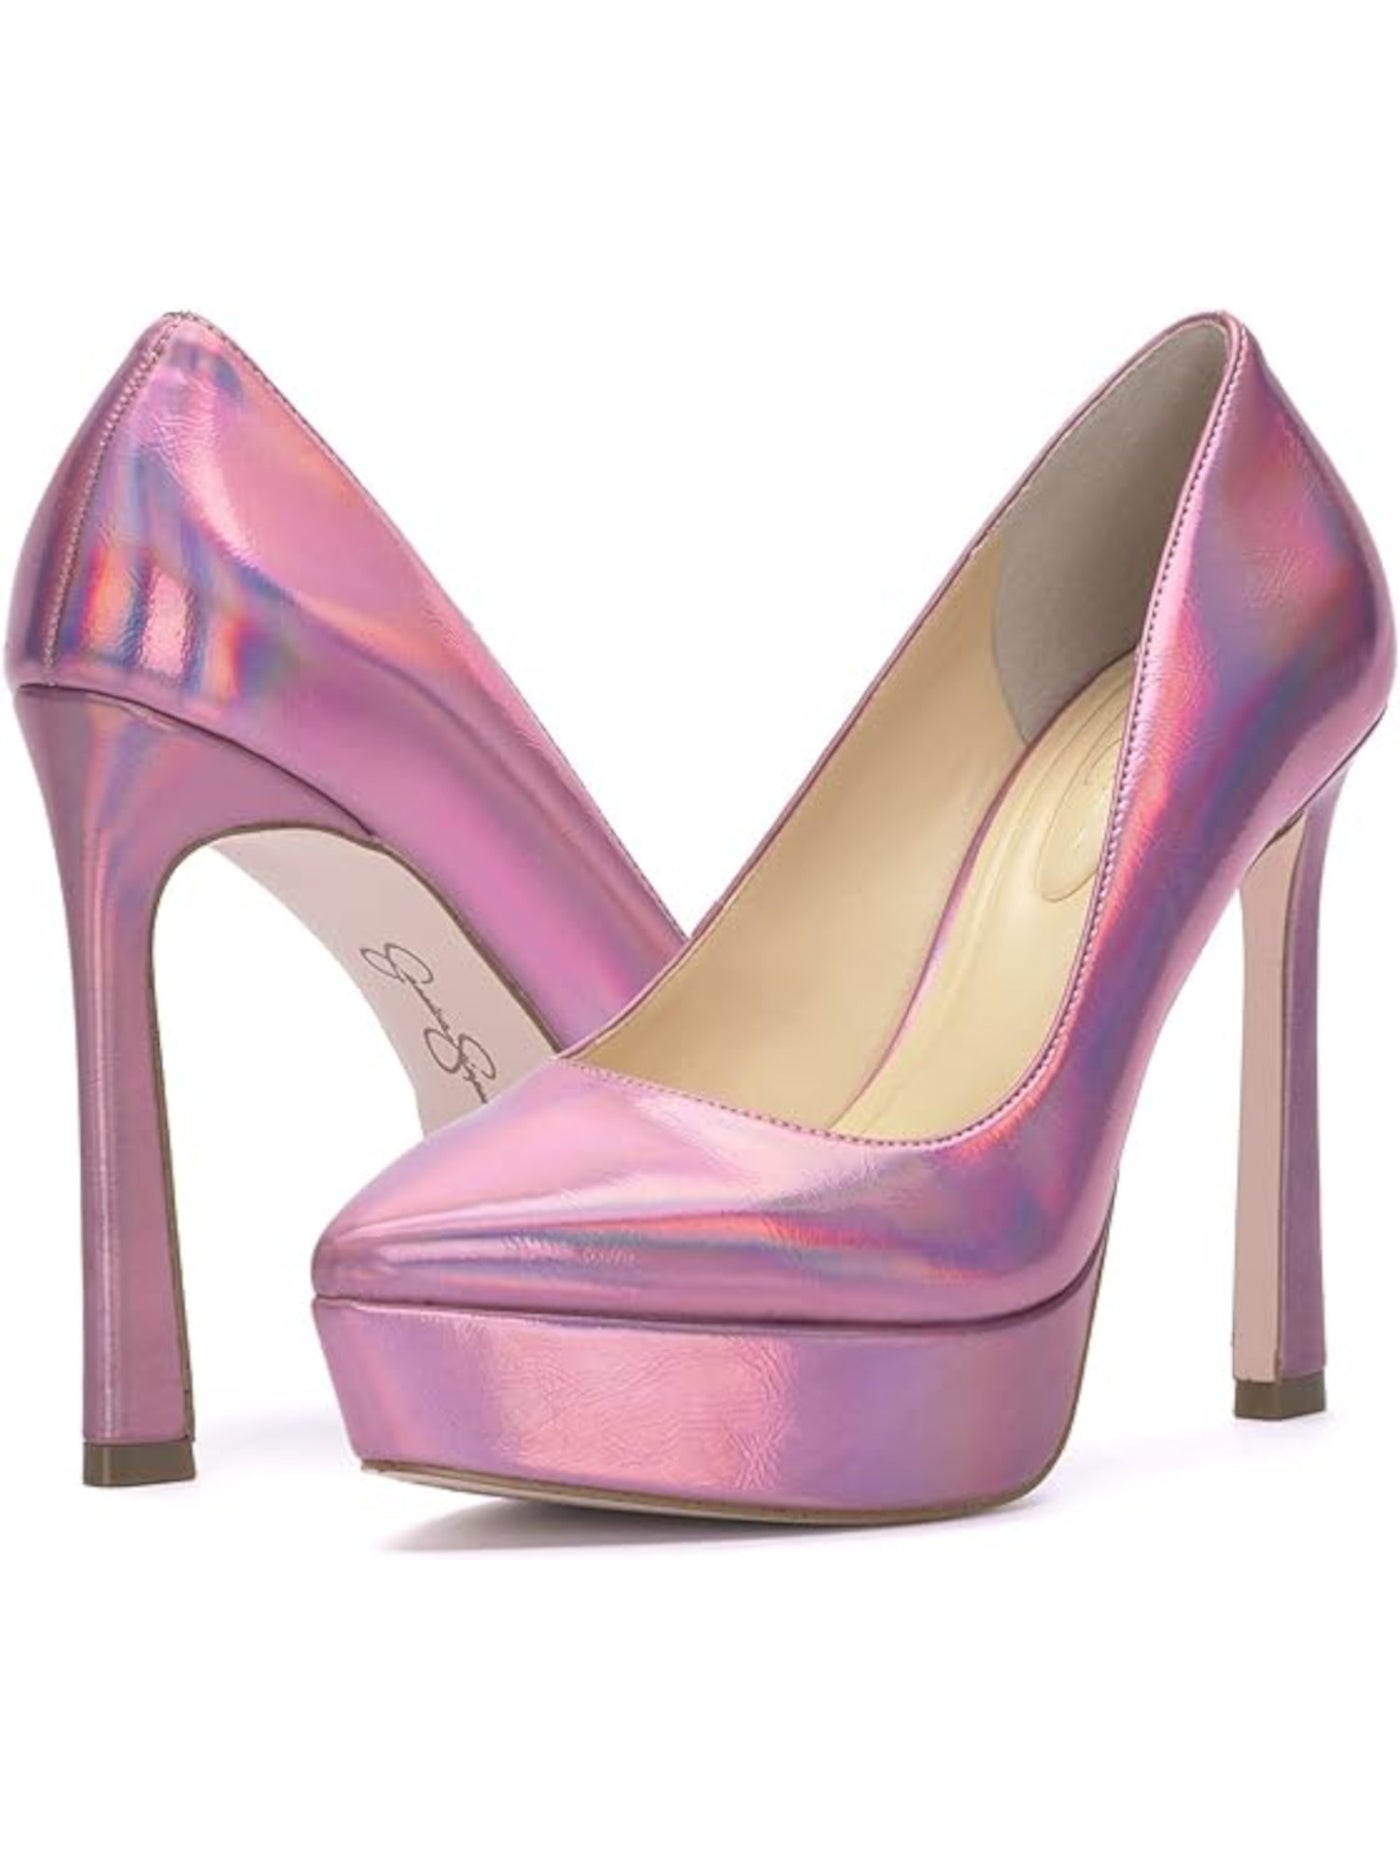 JESSICA SIMPSON Womens Pink 1" Platform Cushioned Jariah Pointed Toe Platform Slip On Dress Pumps Shoes 8.5 M